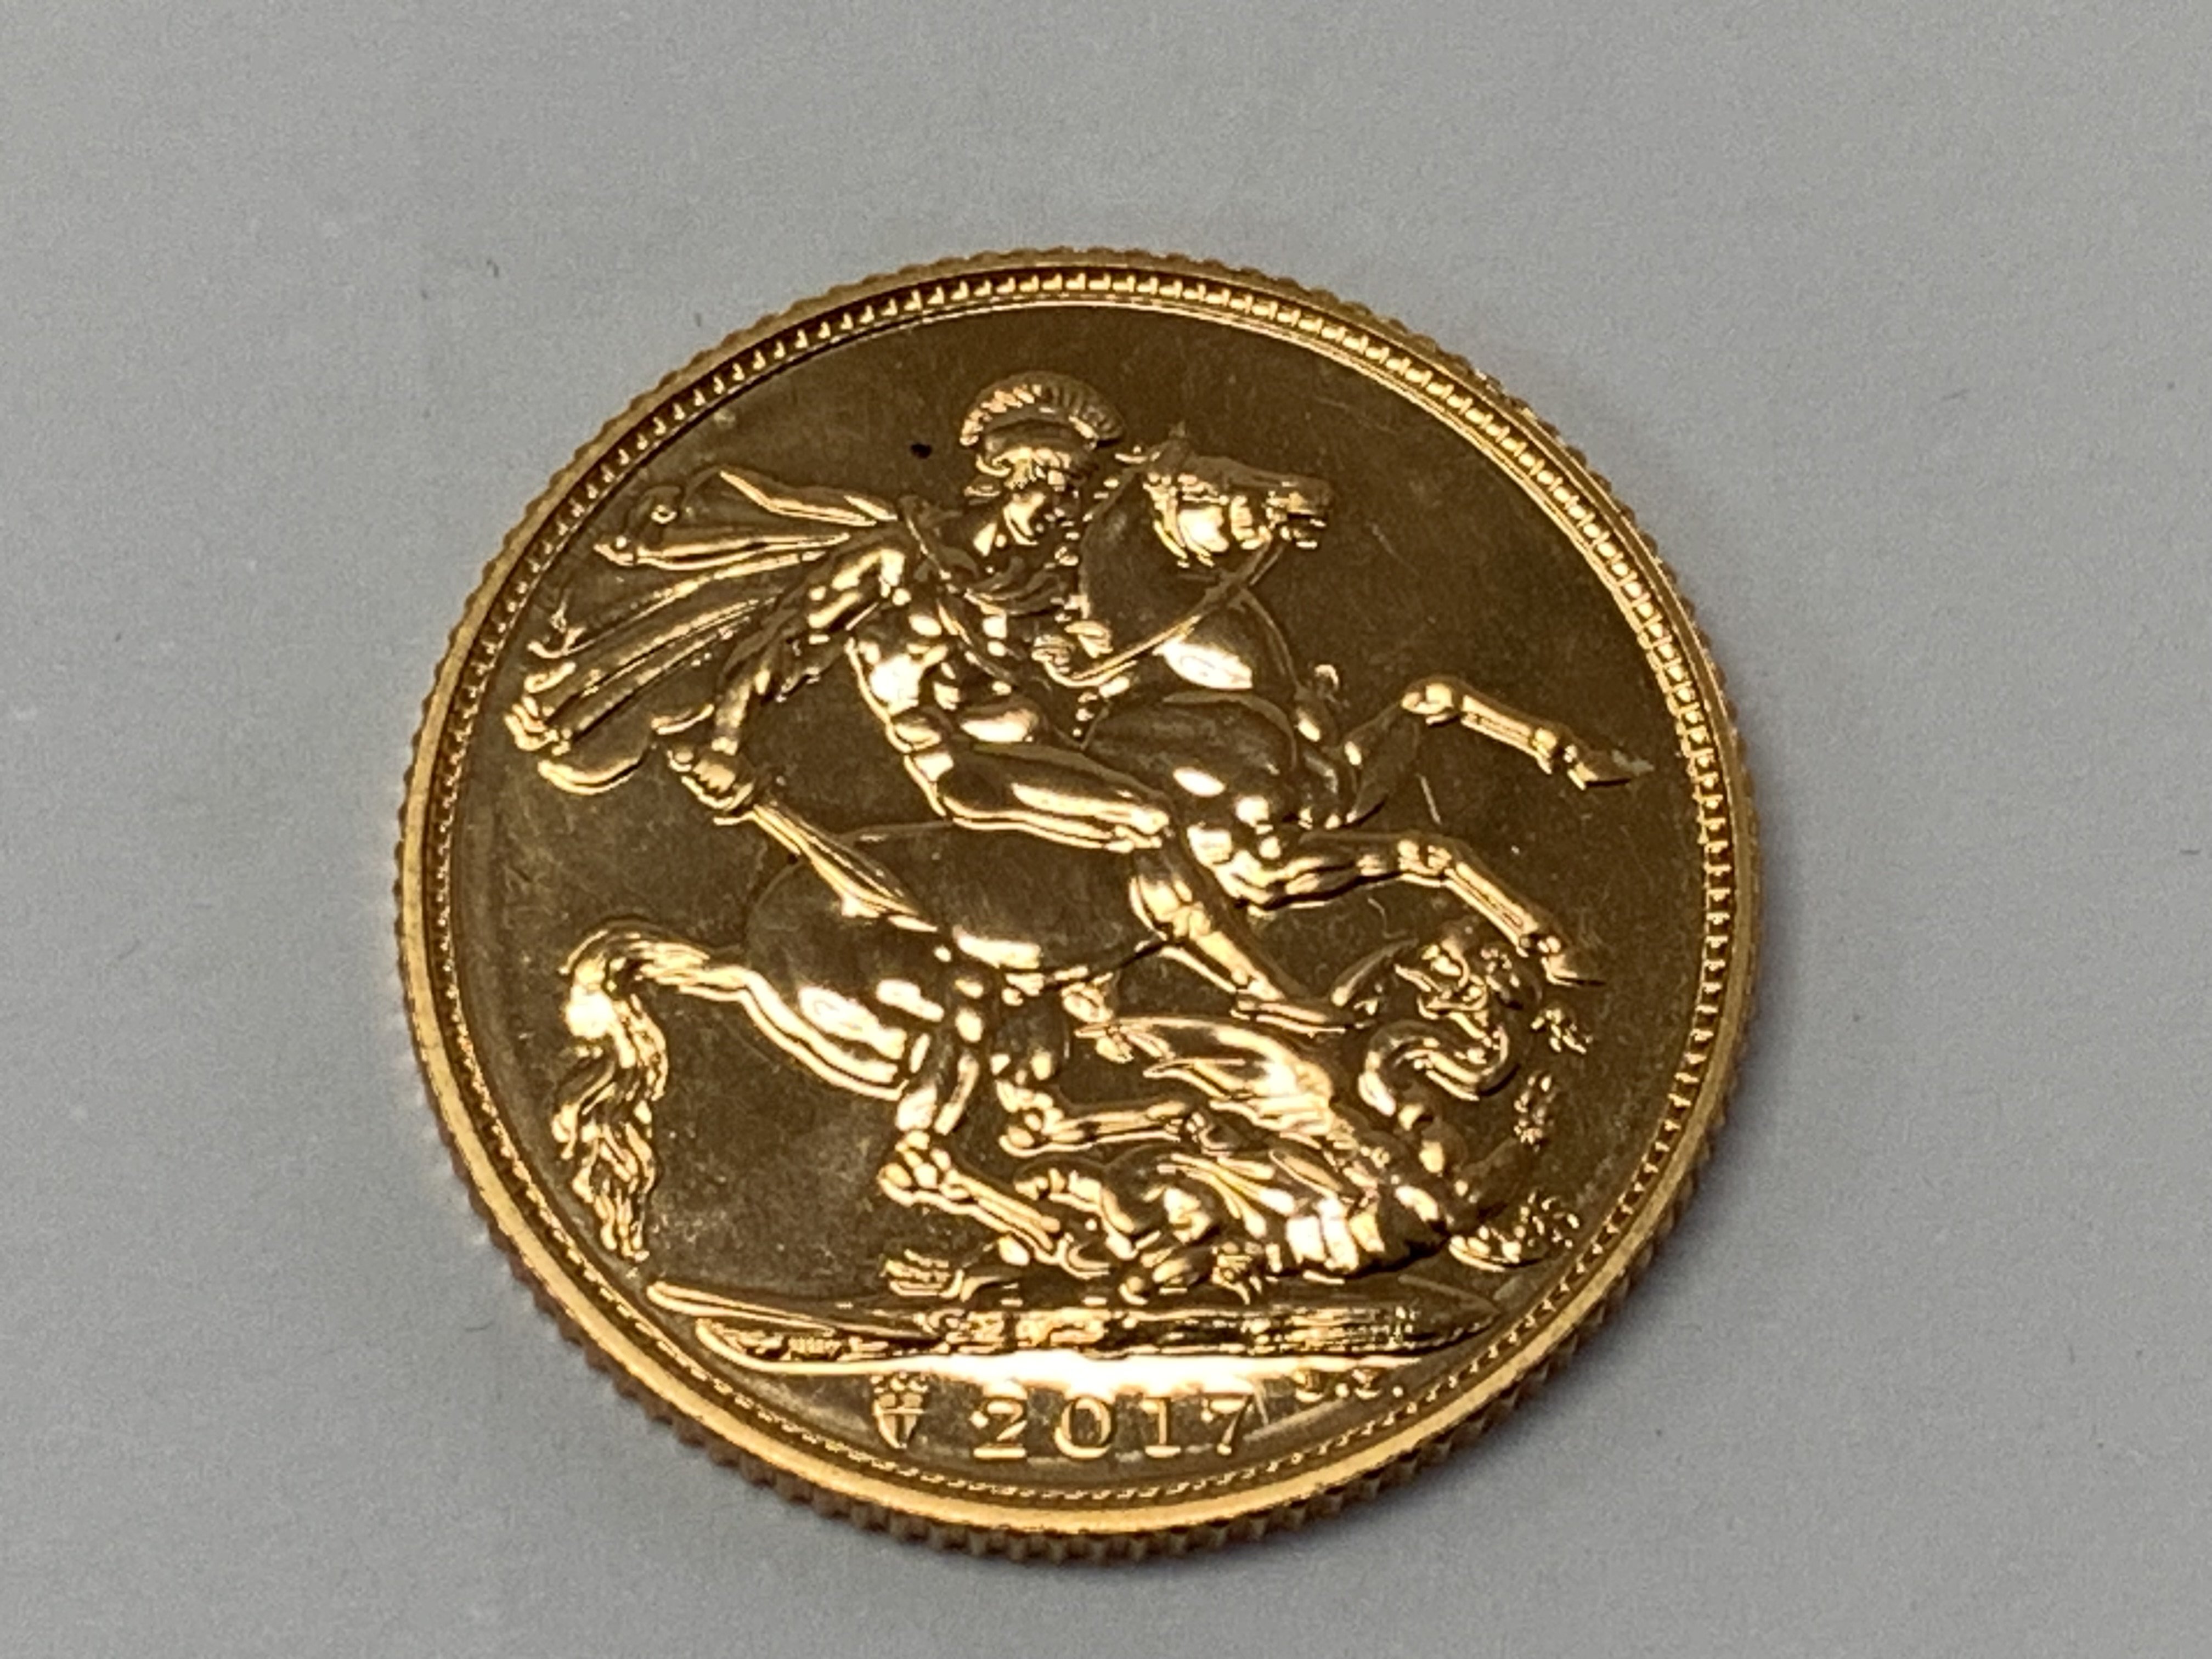 2017 Elizabeth II Gold Proof Sovereign 200th Anniv